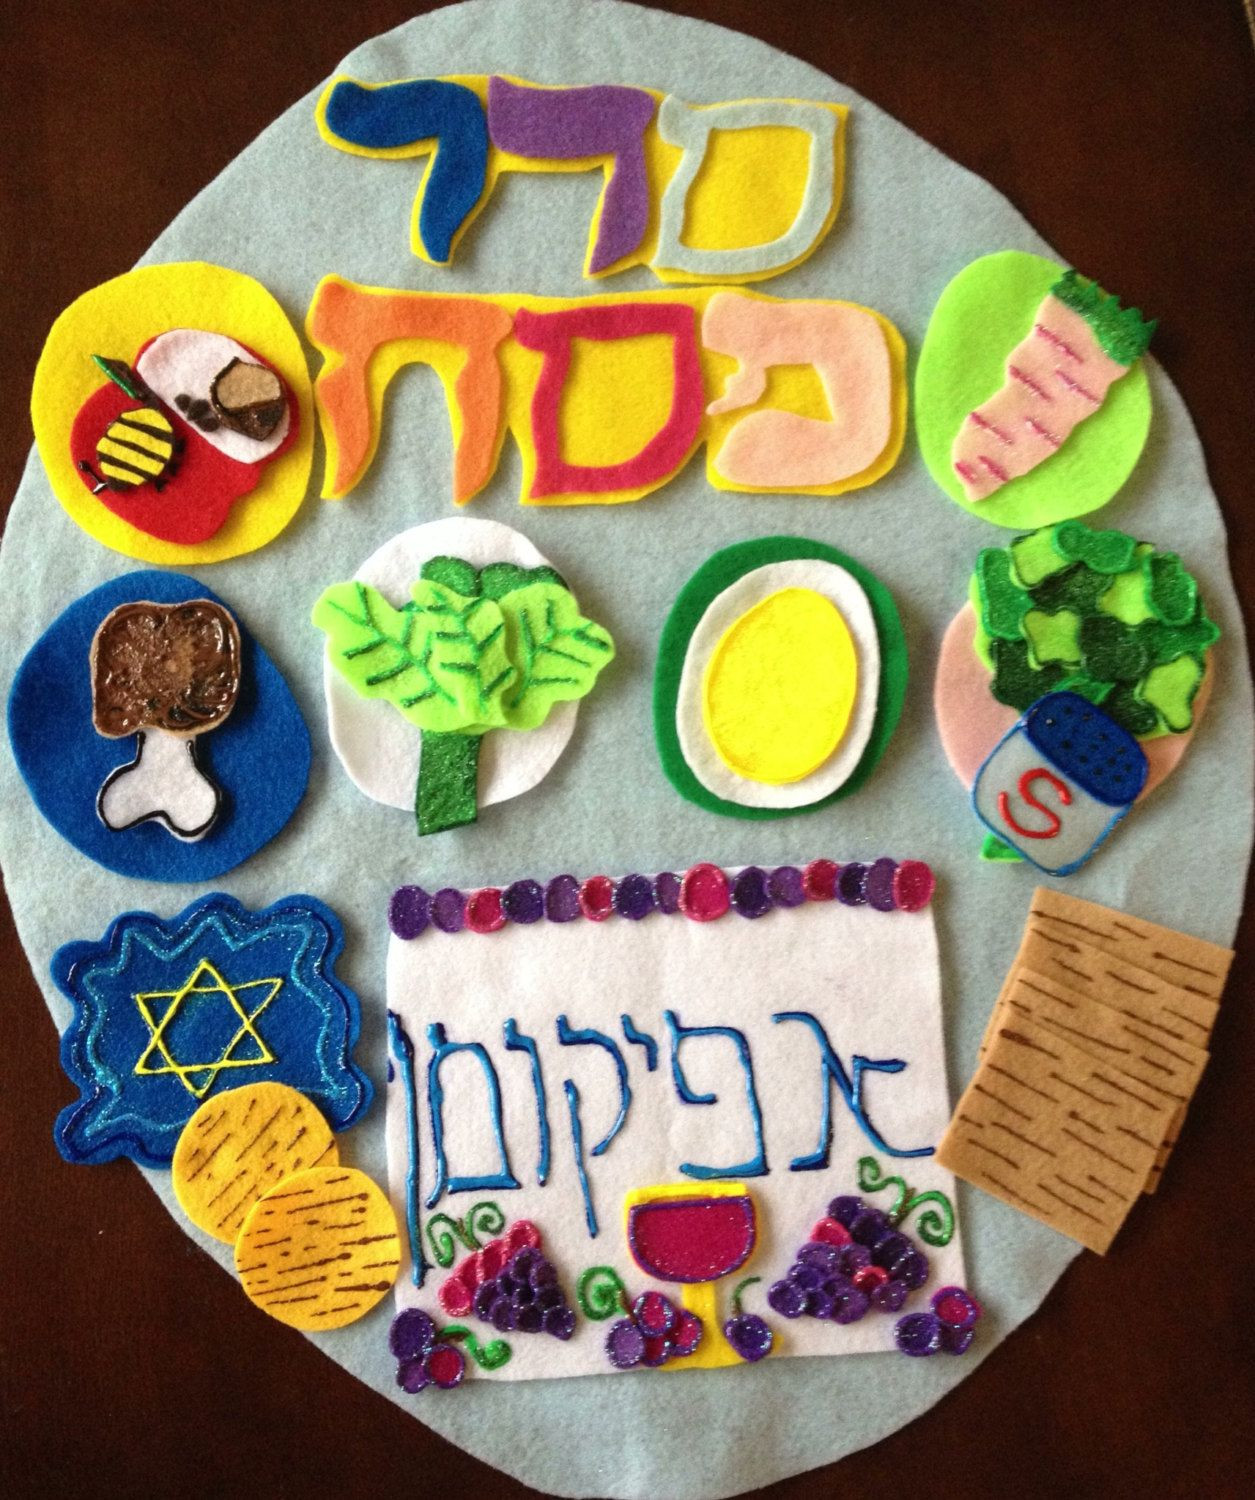 Preschool Passover Crafts
 9 Ways to Make Passover Fun For Kids